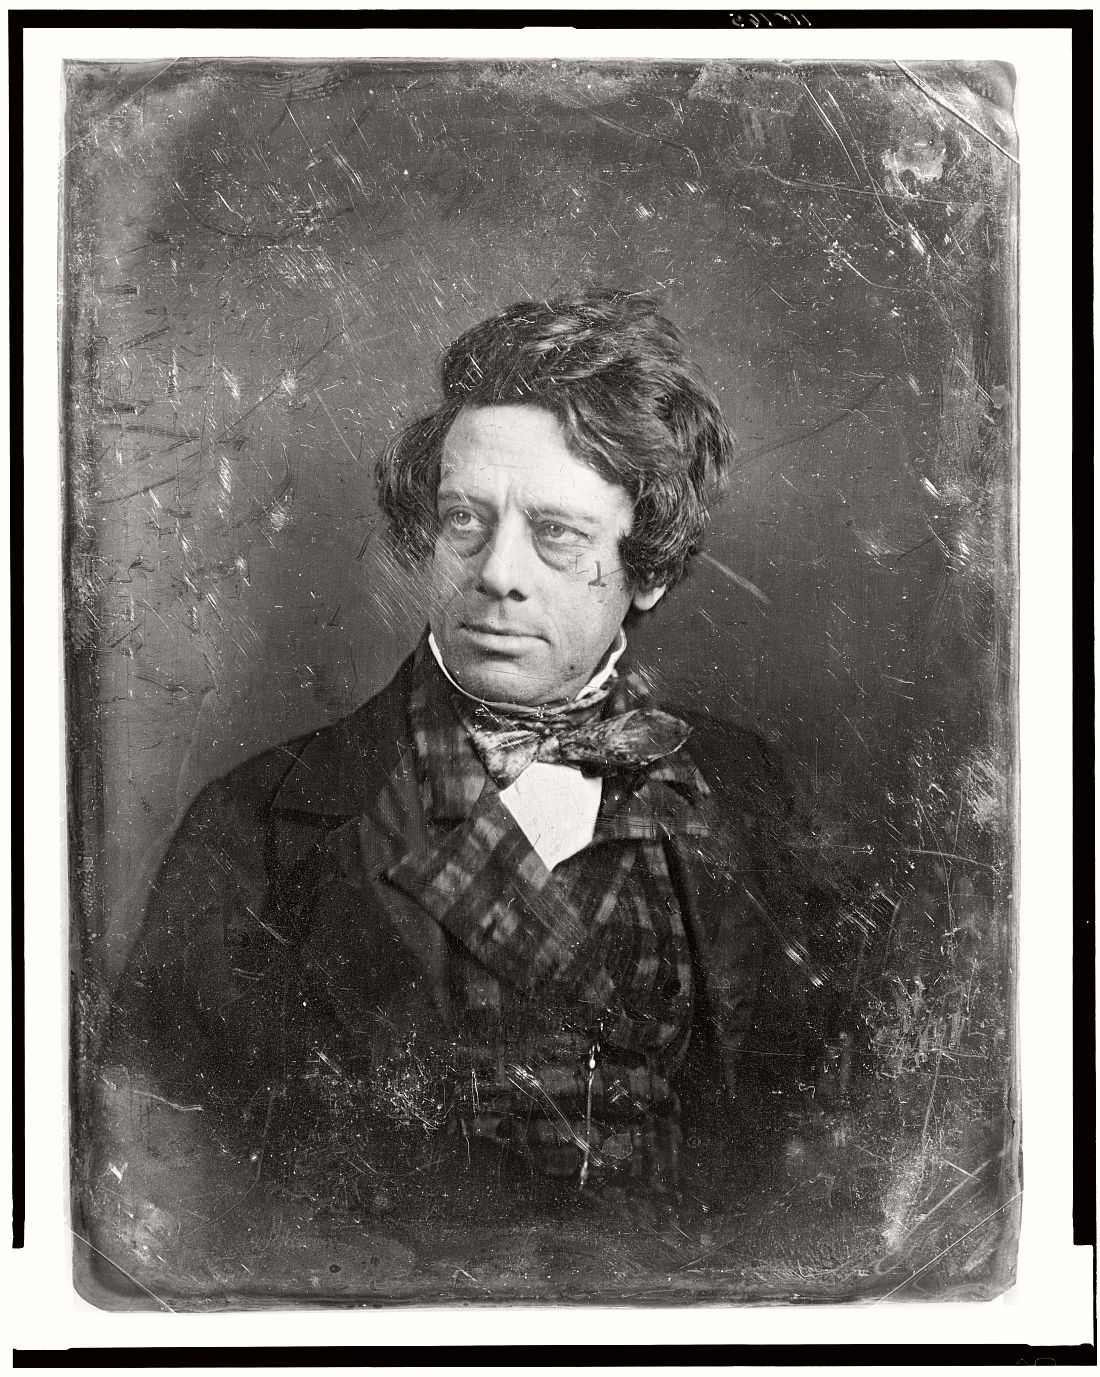 vintage-daguerreotype-portraits-from-xix-century-1844-1860-63